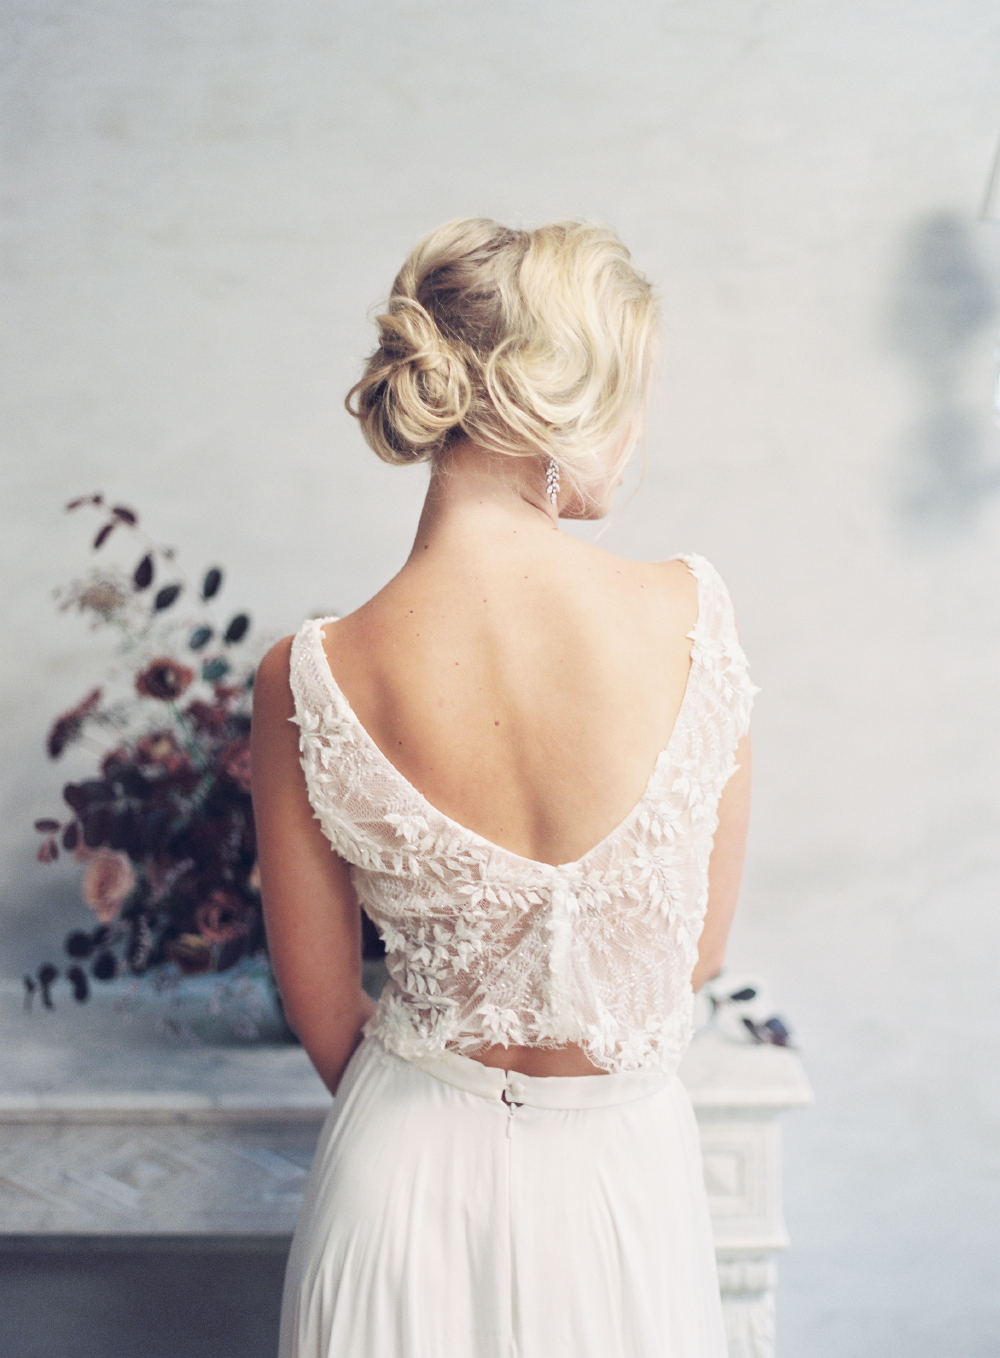 Maguretta bridal gown design by Tanya Anic